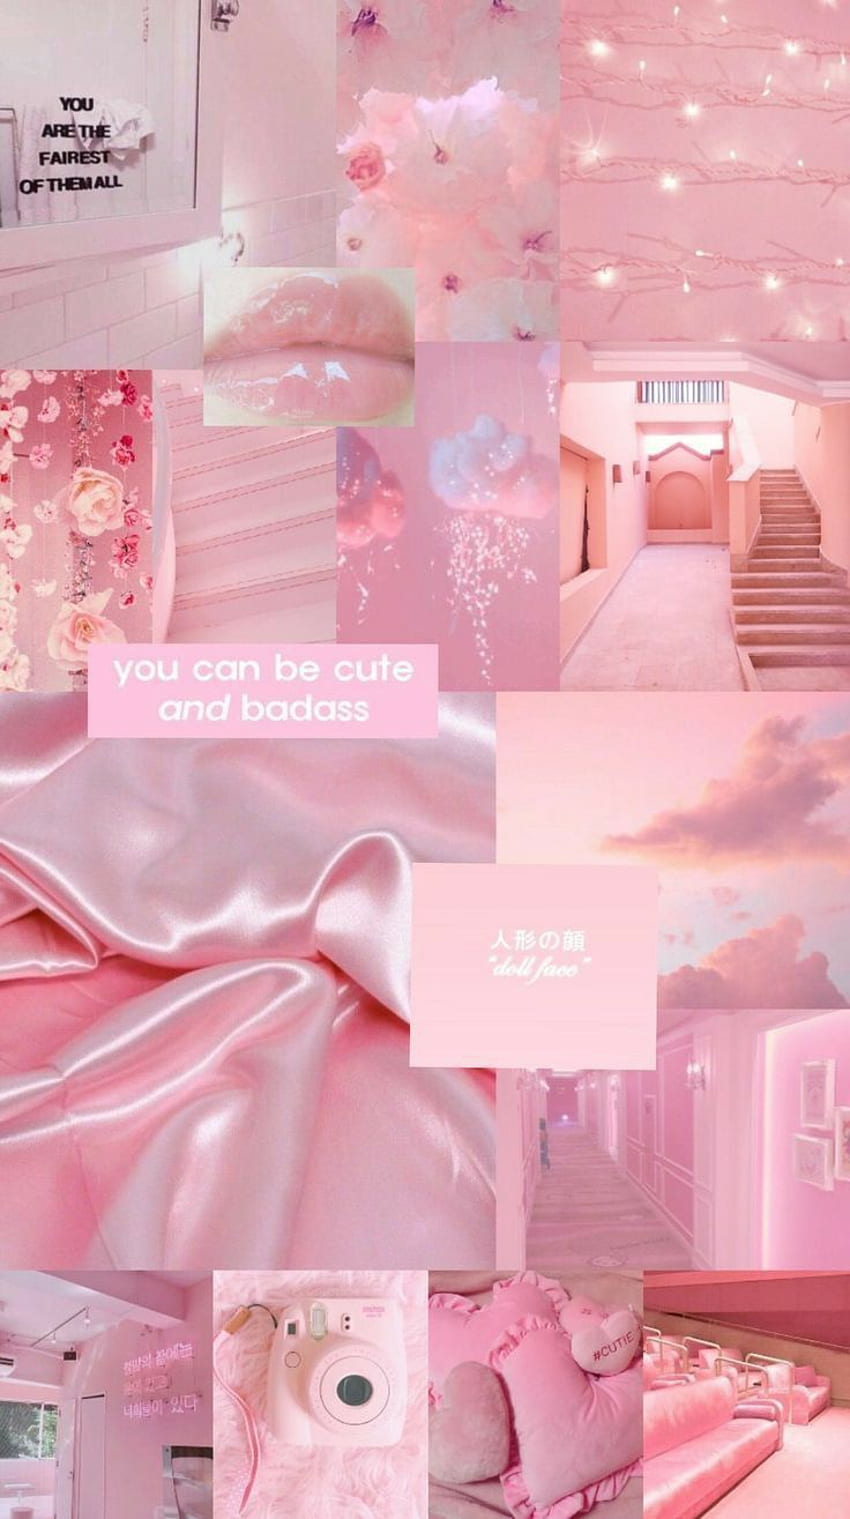 Girly Pink _ Girly di tahun 2020. Pink girly, pink dan biru, Pastel pink aesthetic wallpaper ponsel HD